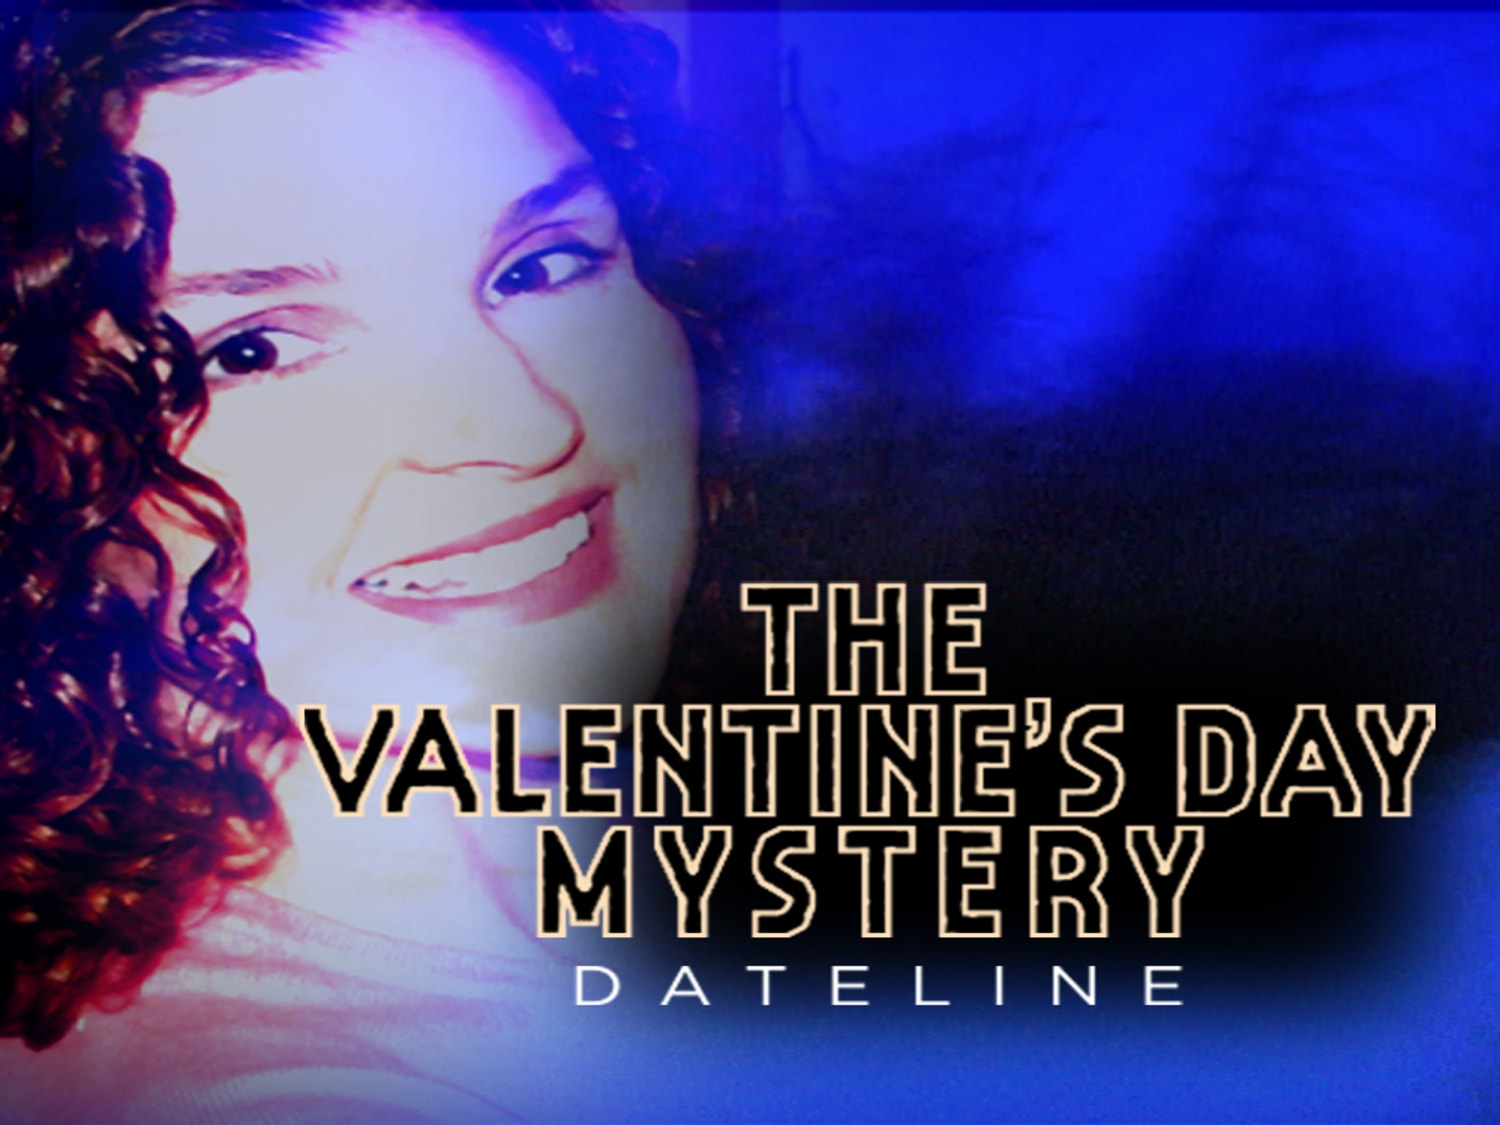 Valentines Day murder mystery photo